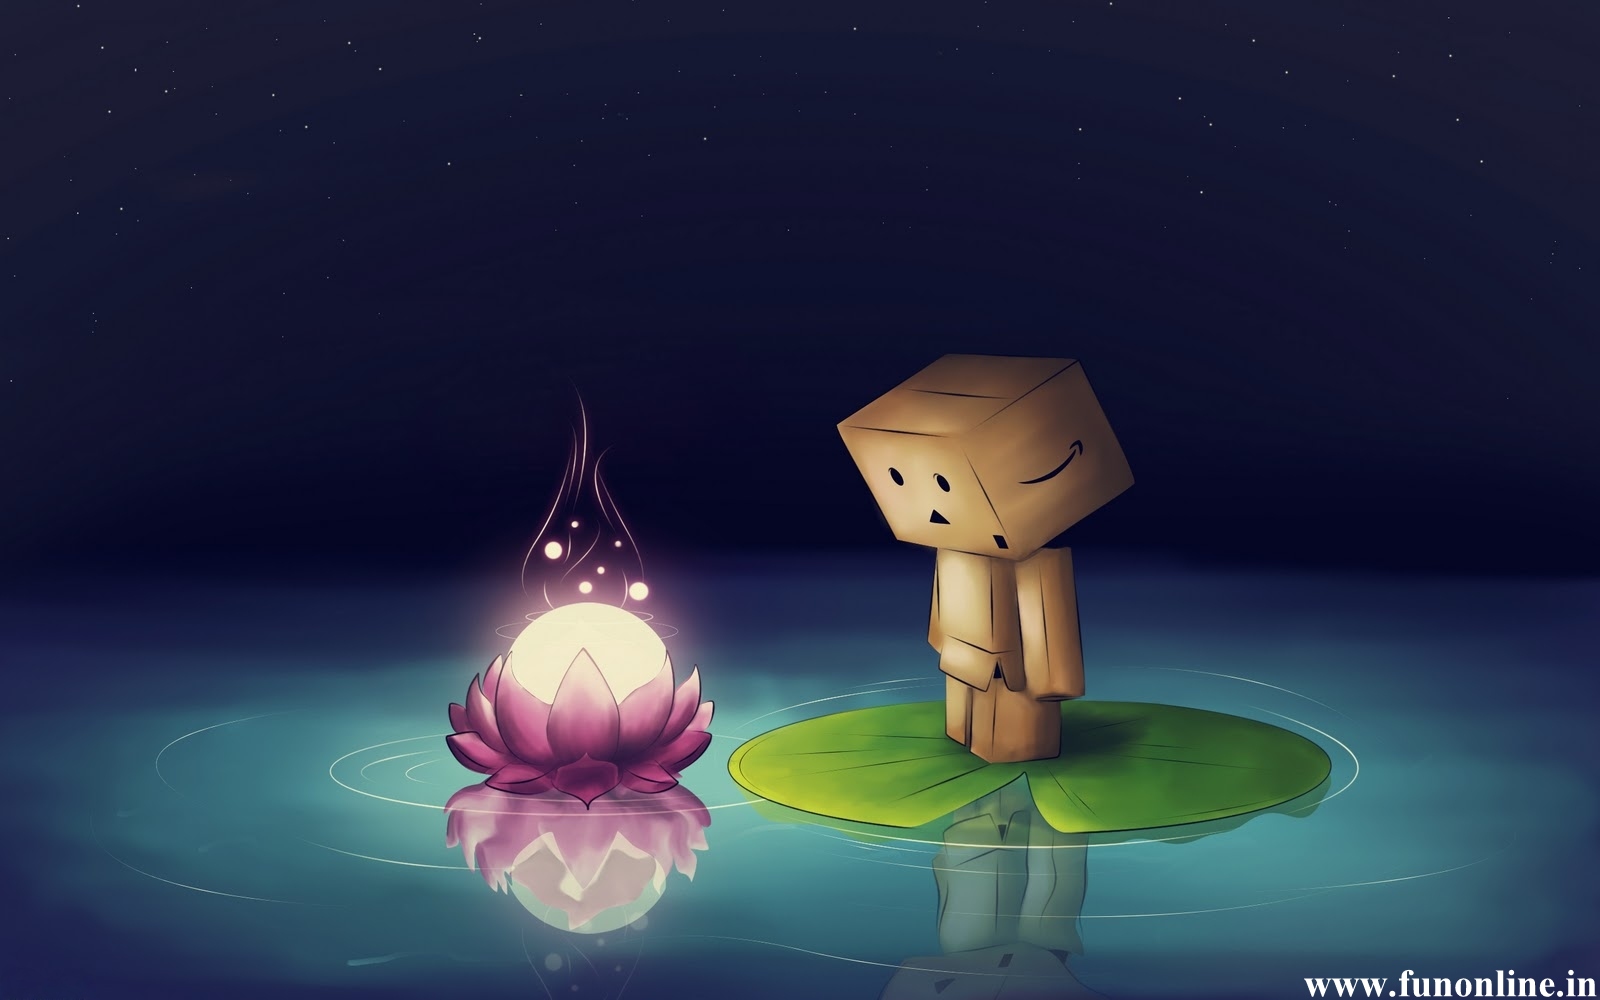 Animated Lotus Flower Wallpaper - Cute Amazon Box Robot , HD Wallpaper & Backgrounds